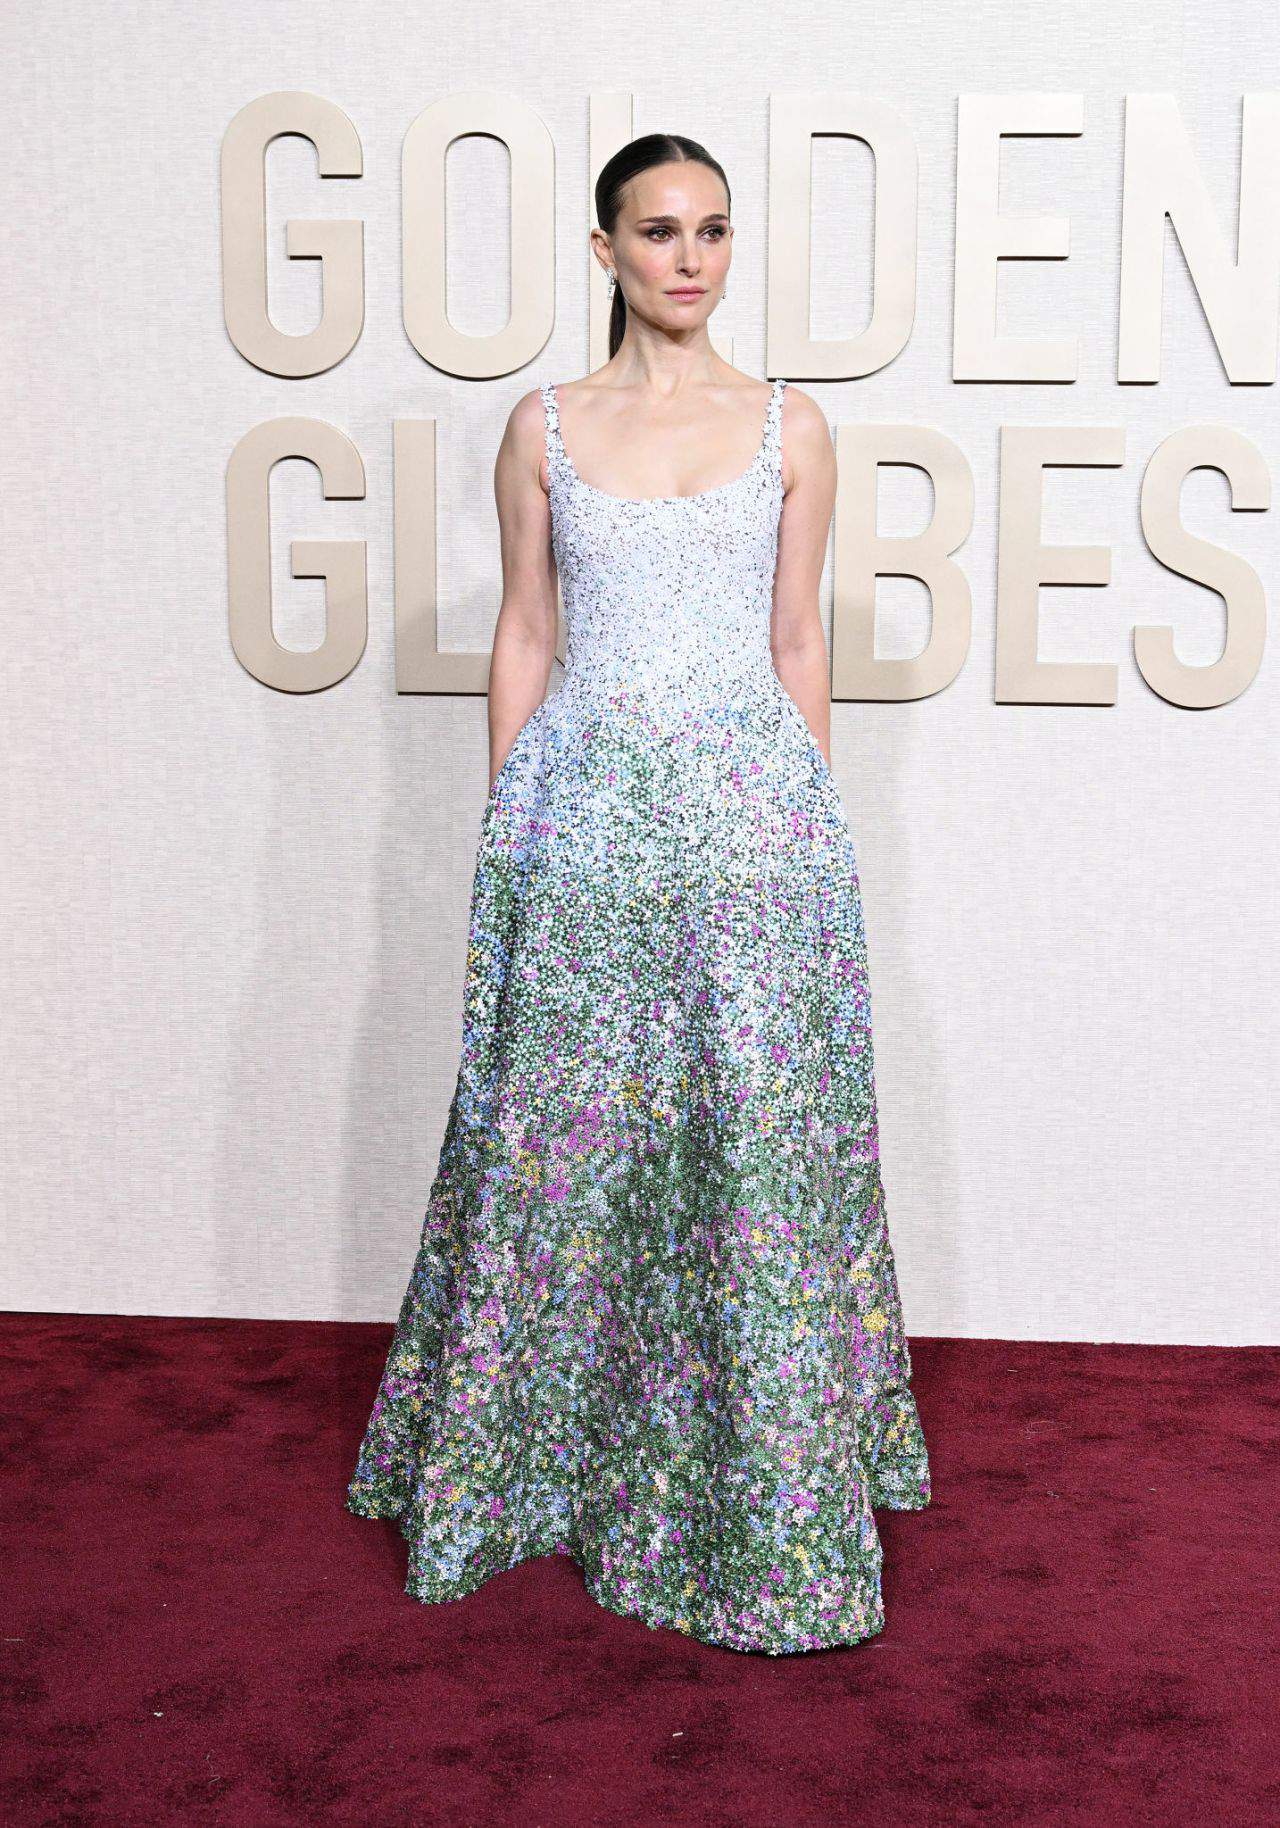 Natalie Portman Dazzles in Floral Gown at 81st Golden Globe Awards